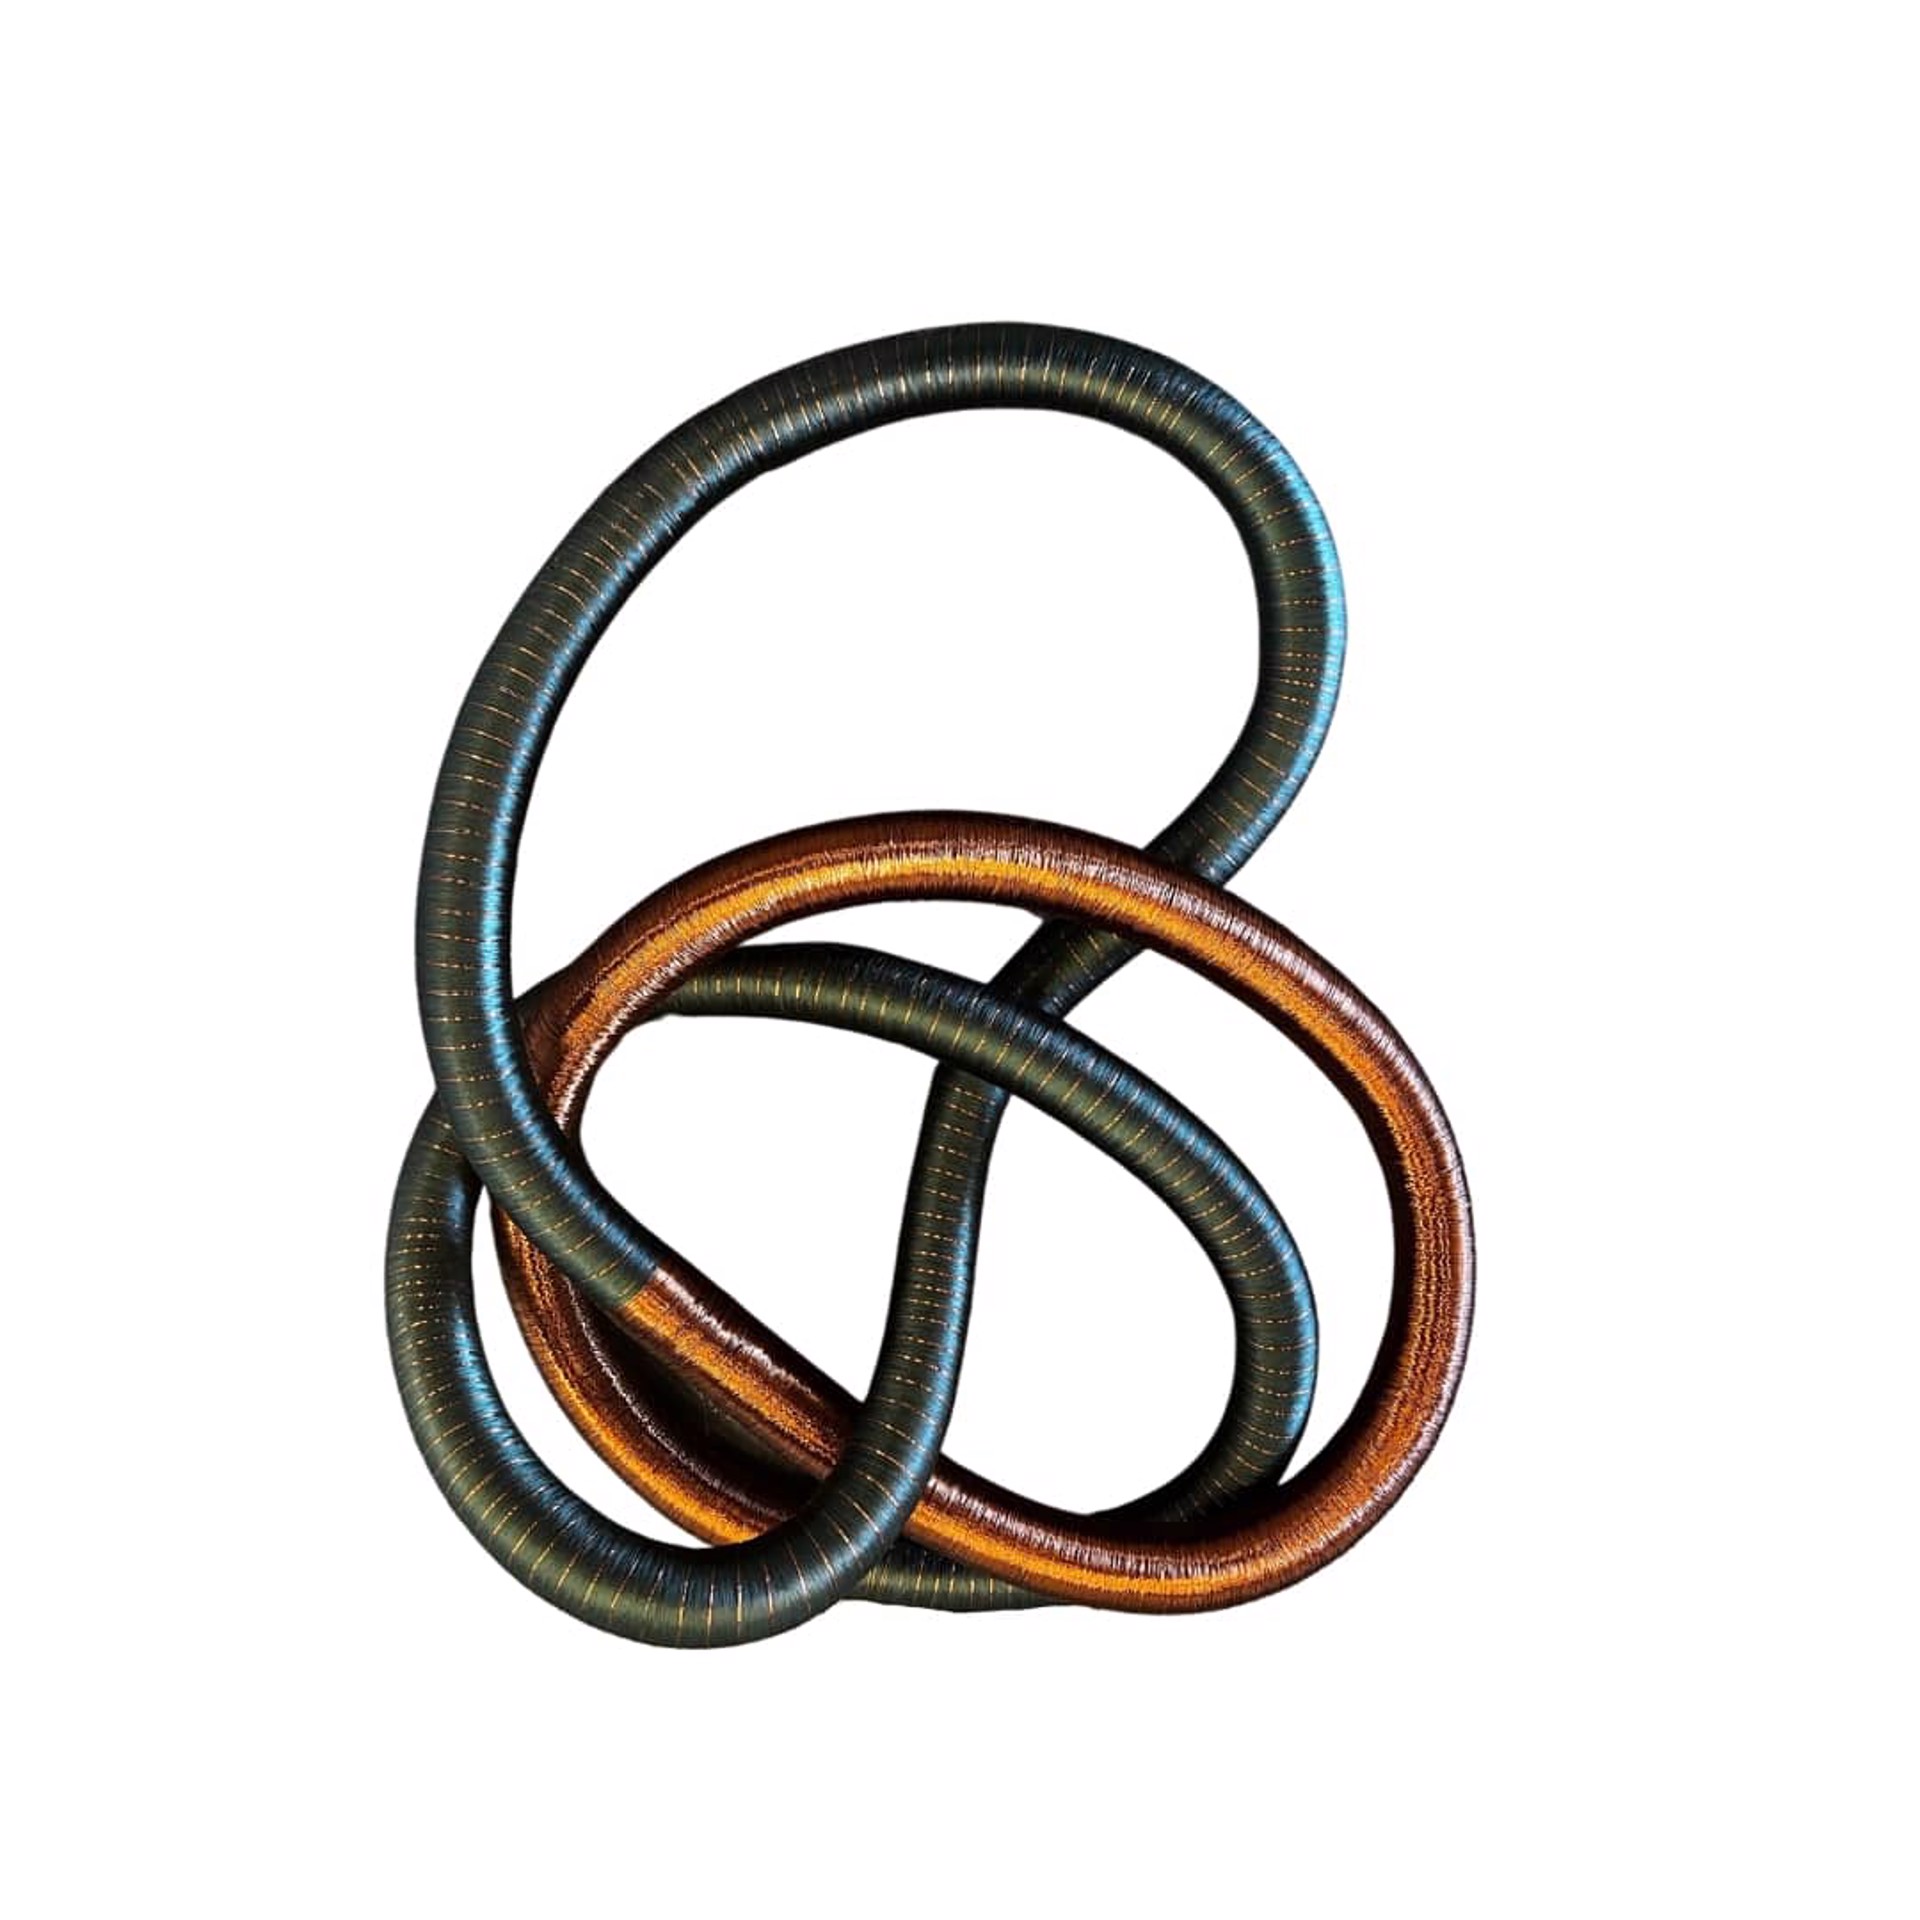 Copper Loop by Jesus Pedraglio Belmont